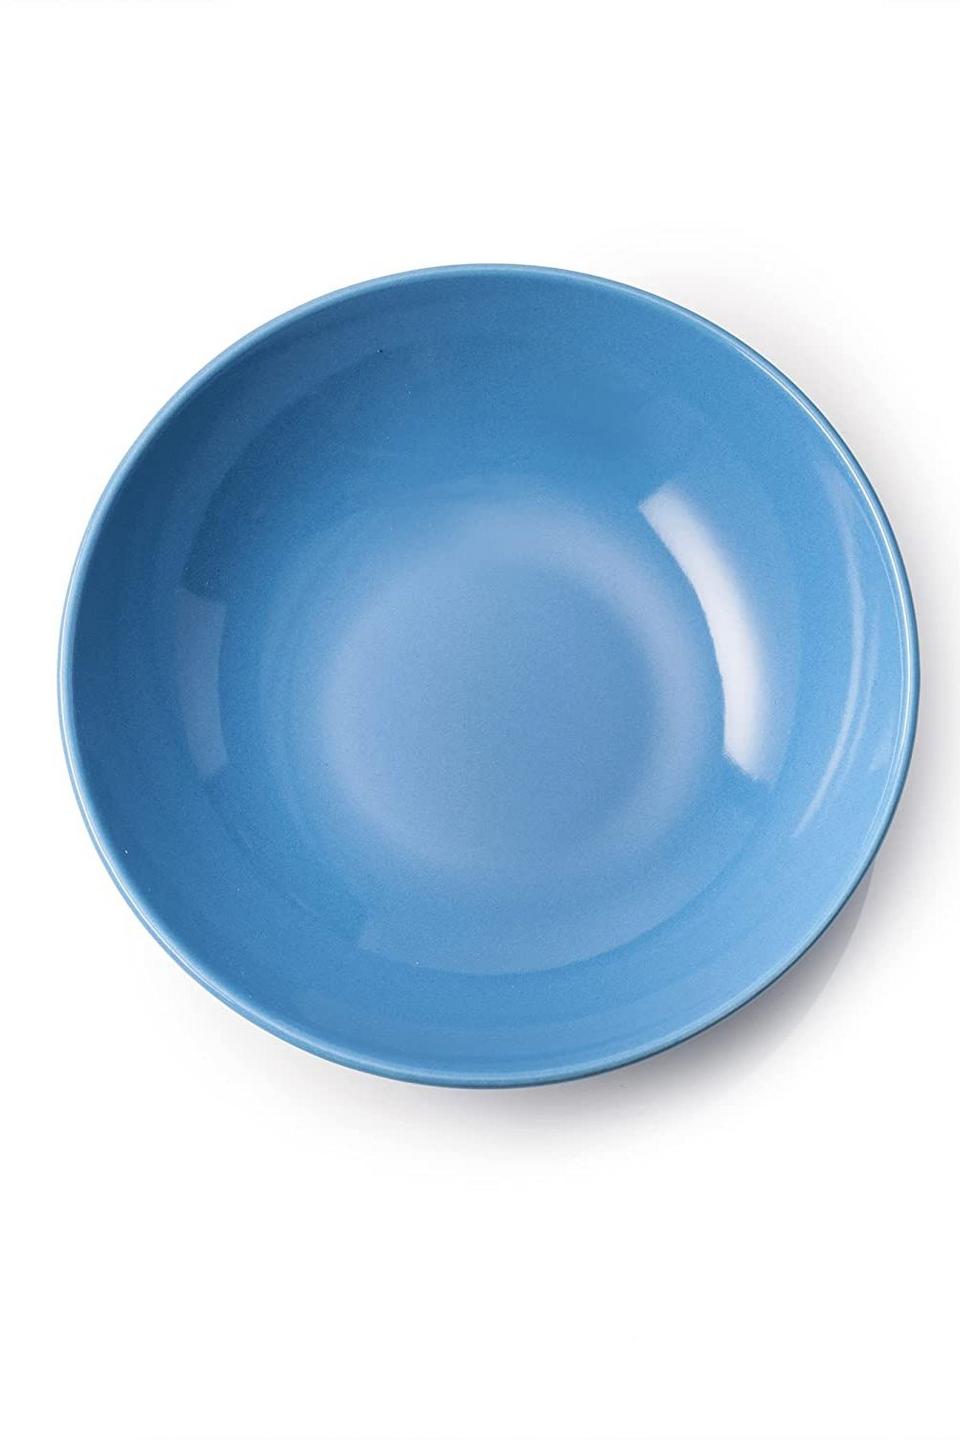 Plates | United Colors Set of 18 Stoneware Dinnerware Plates Blue ...